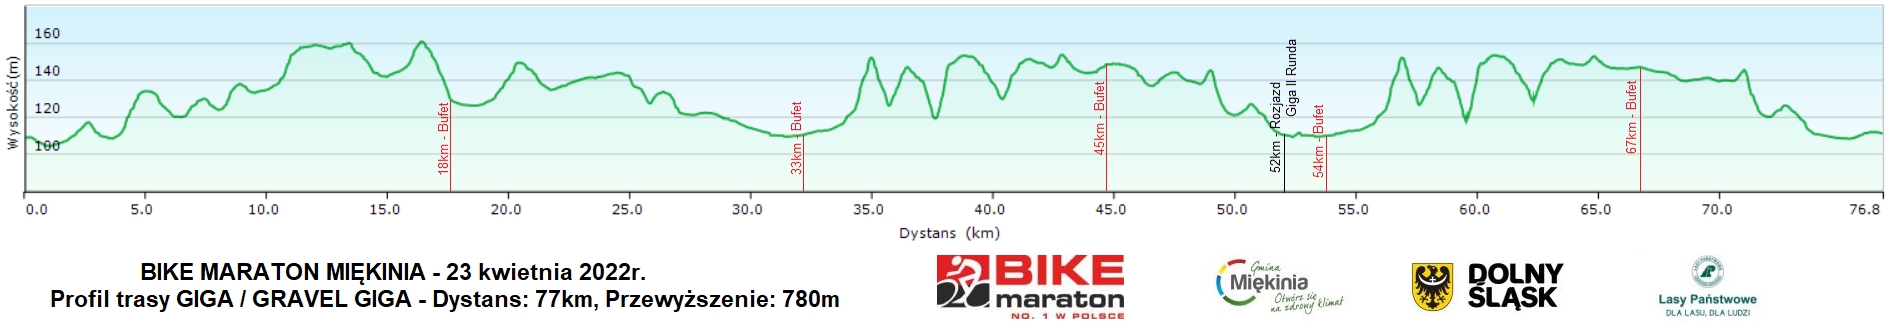 bike-maraton-2022-miekinia-profil-trasy-giga-gravel